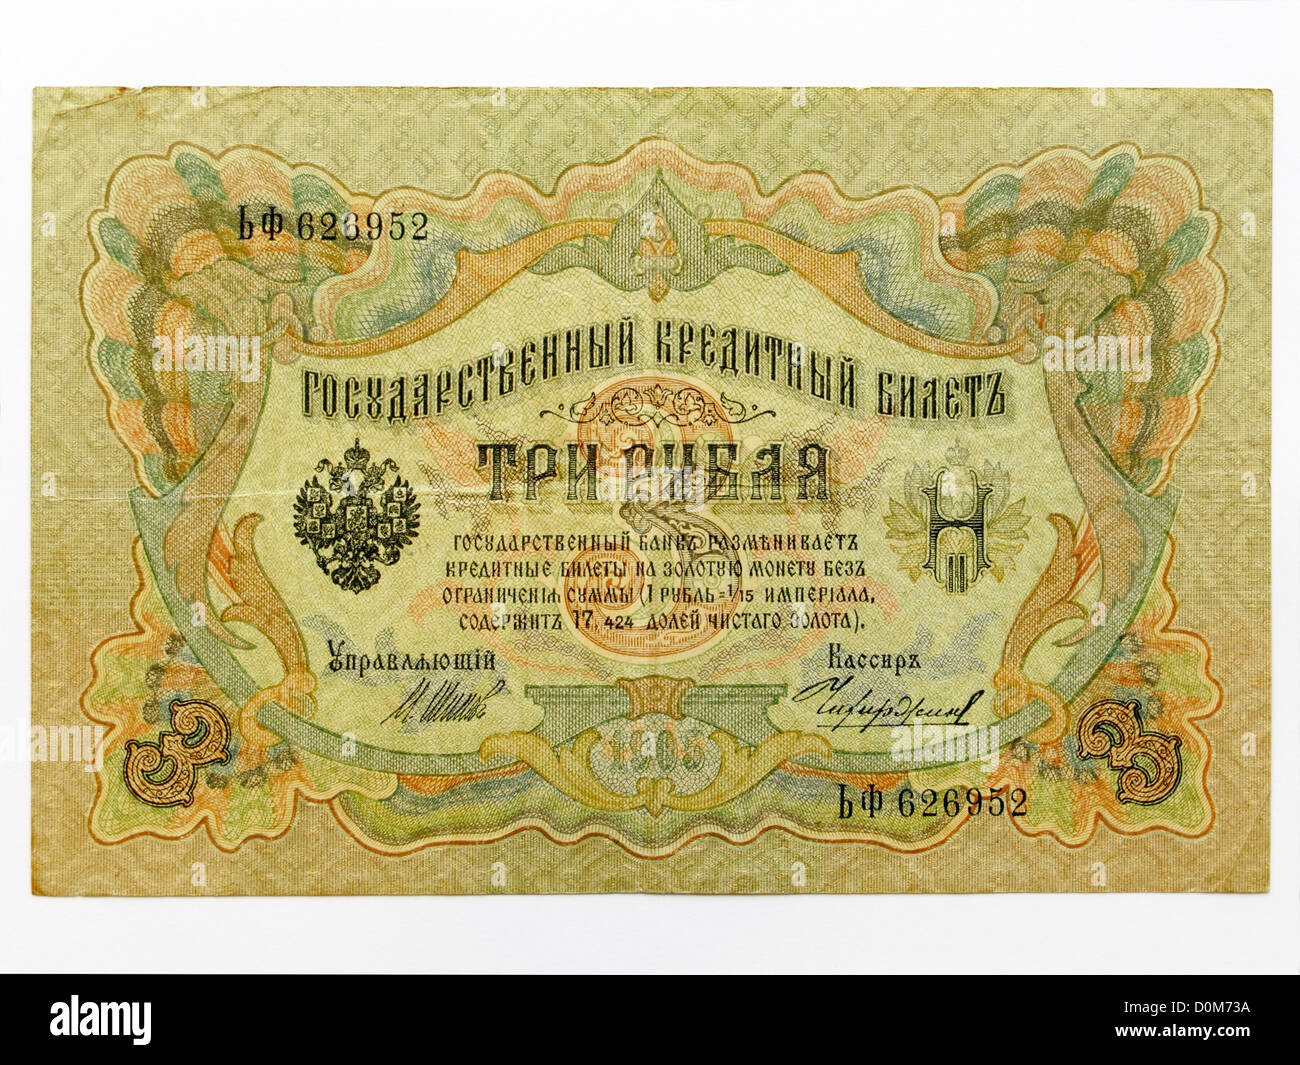 Russia 3 Rubles BANKNOTE 1905 